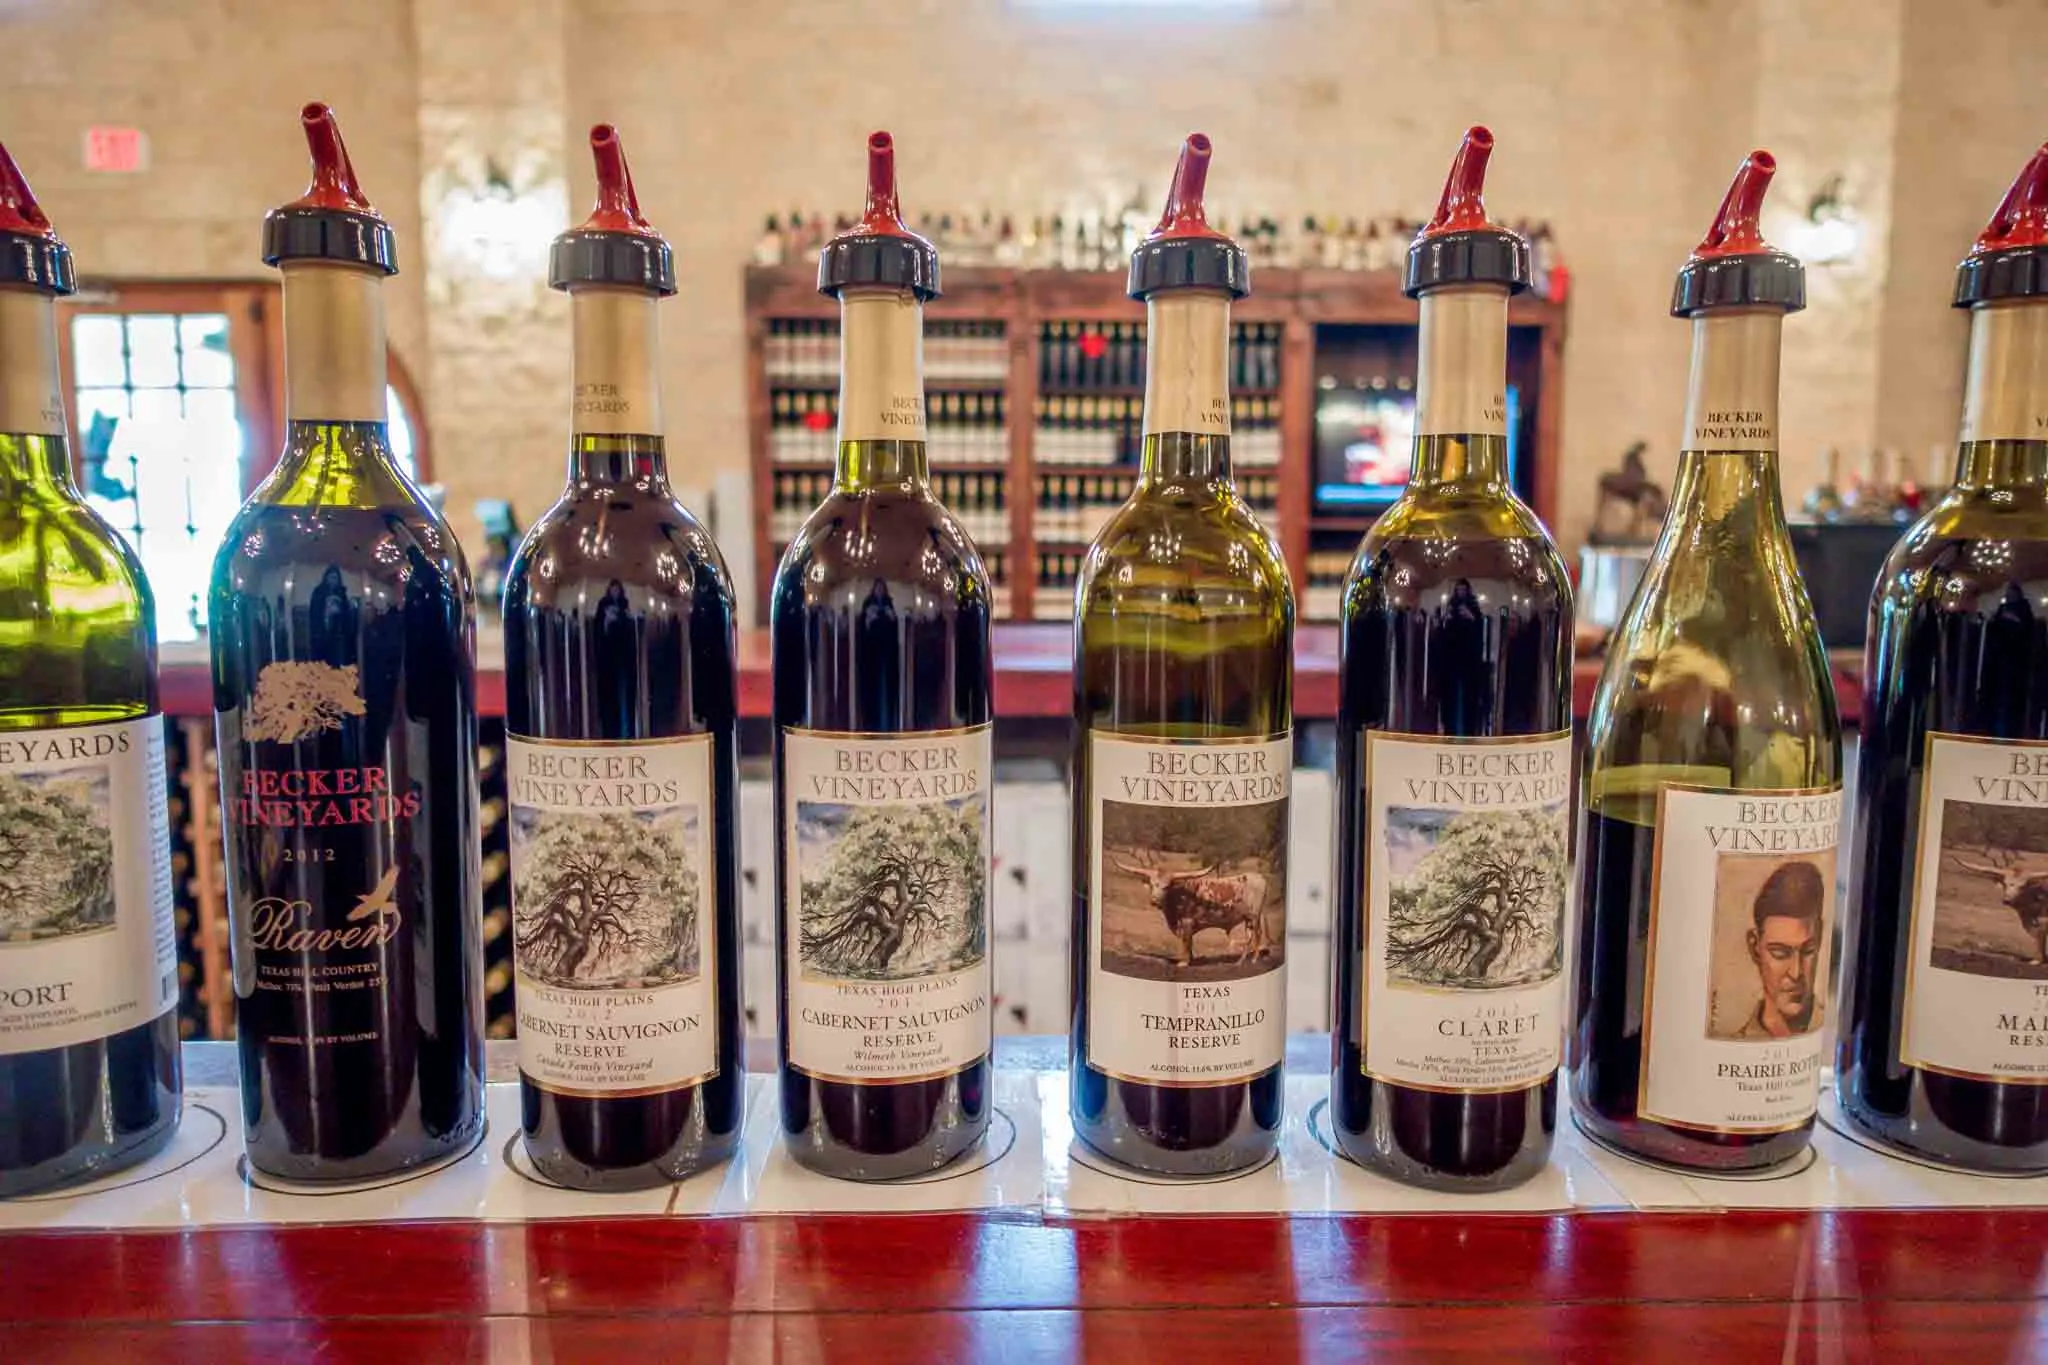 Wine bottles from Becker Vineyards, one of the largest Fredericksburg wineries